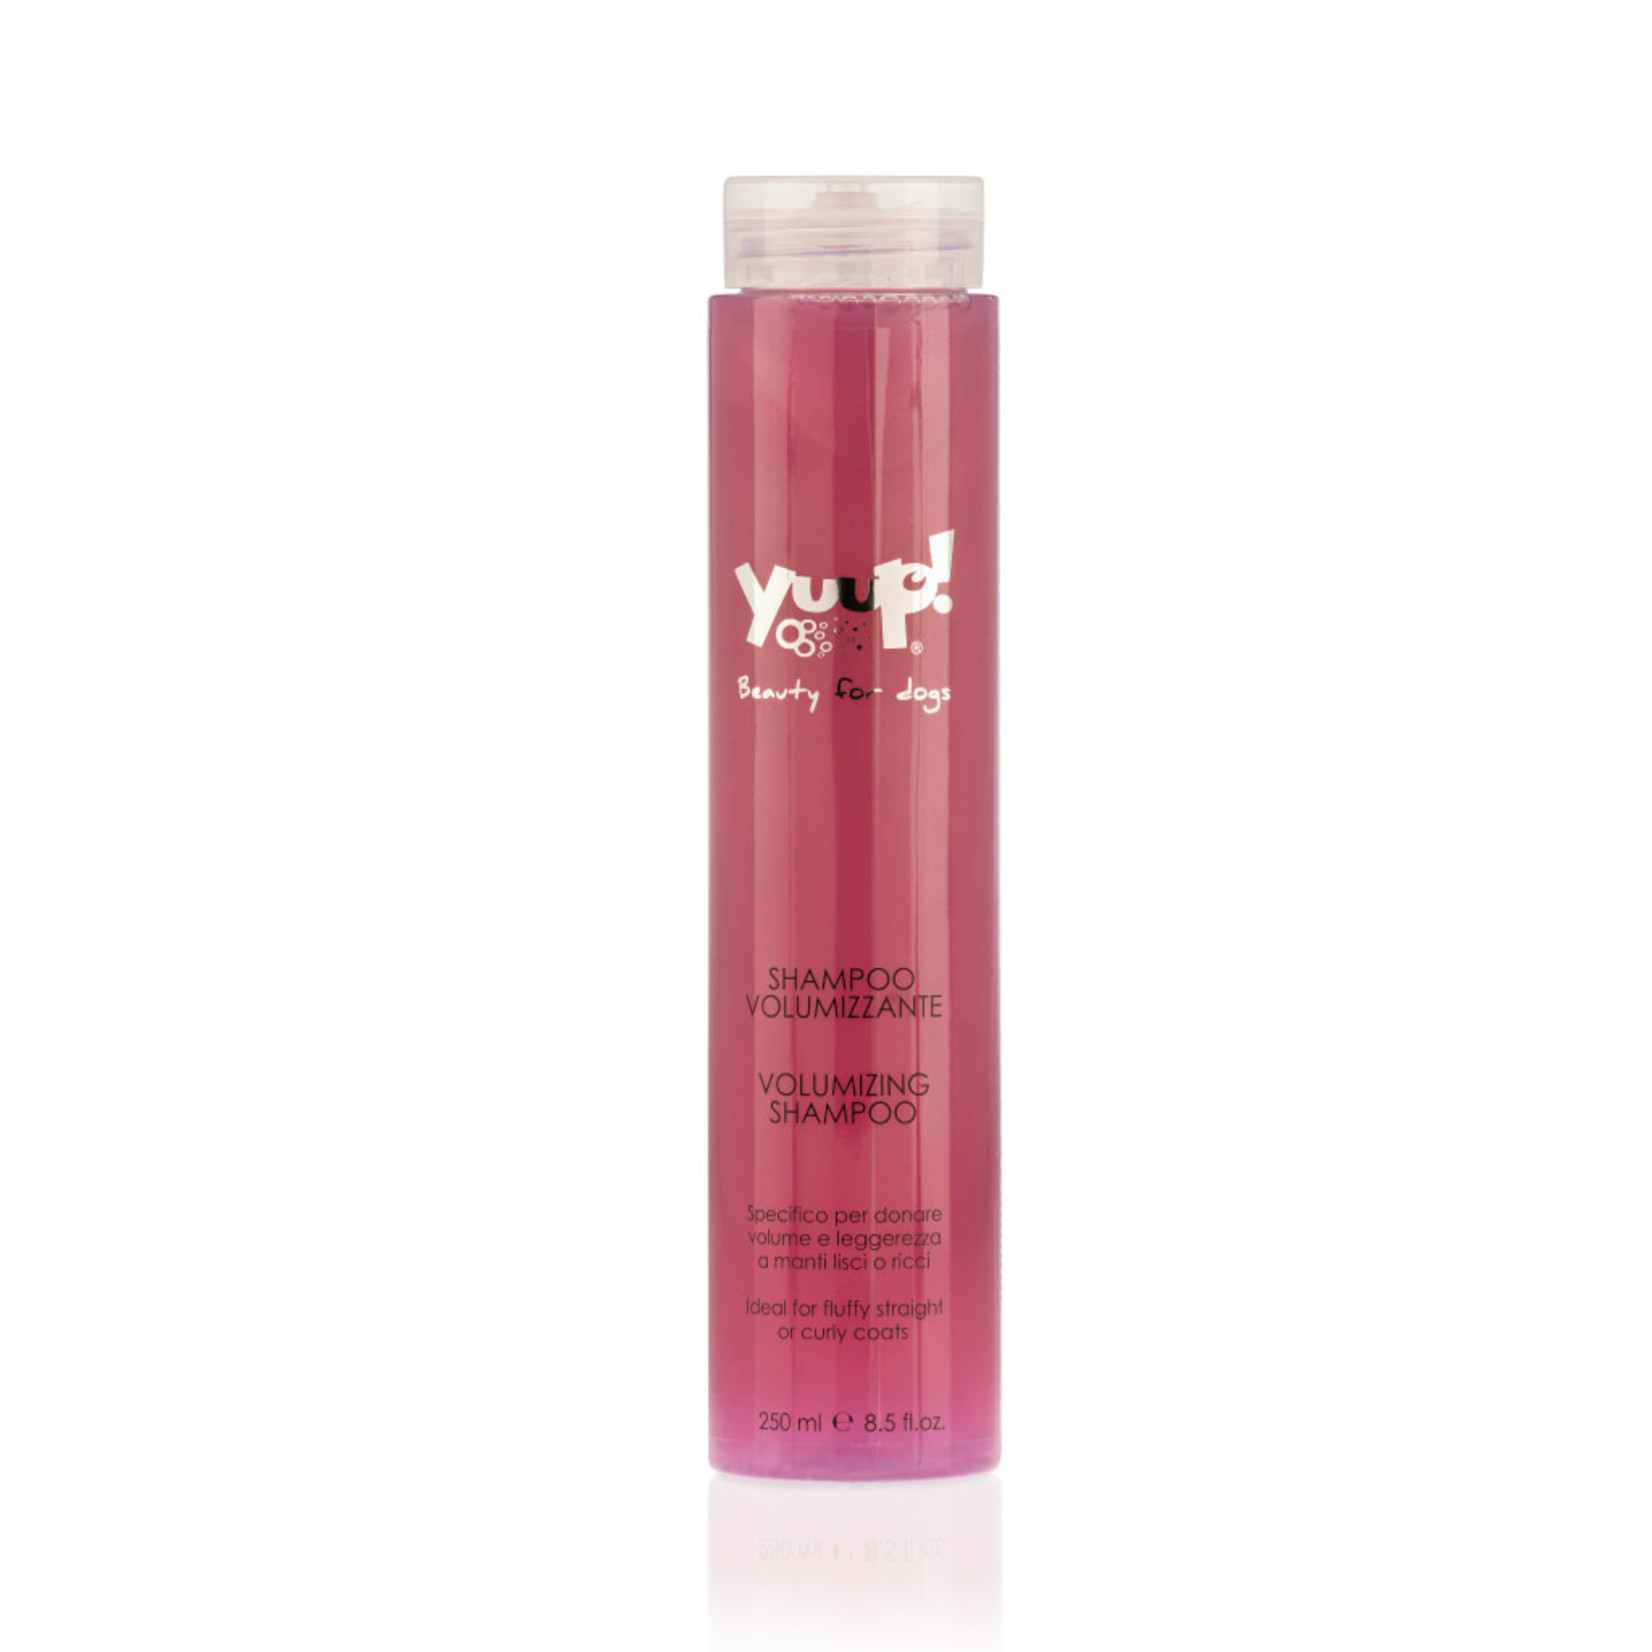 Yuup! Shampoo Volumizing 250ml